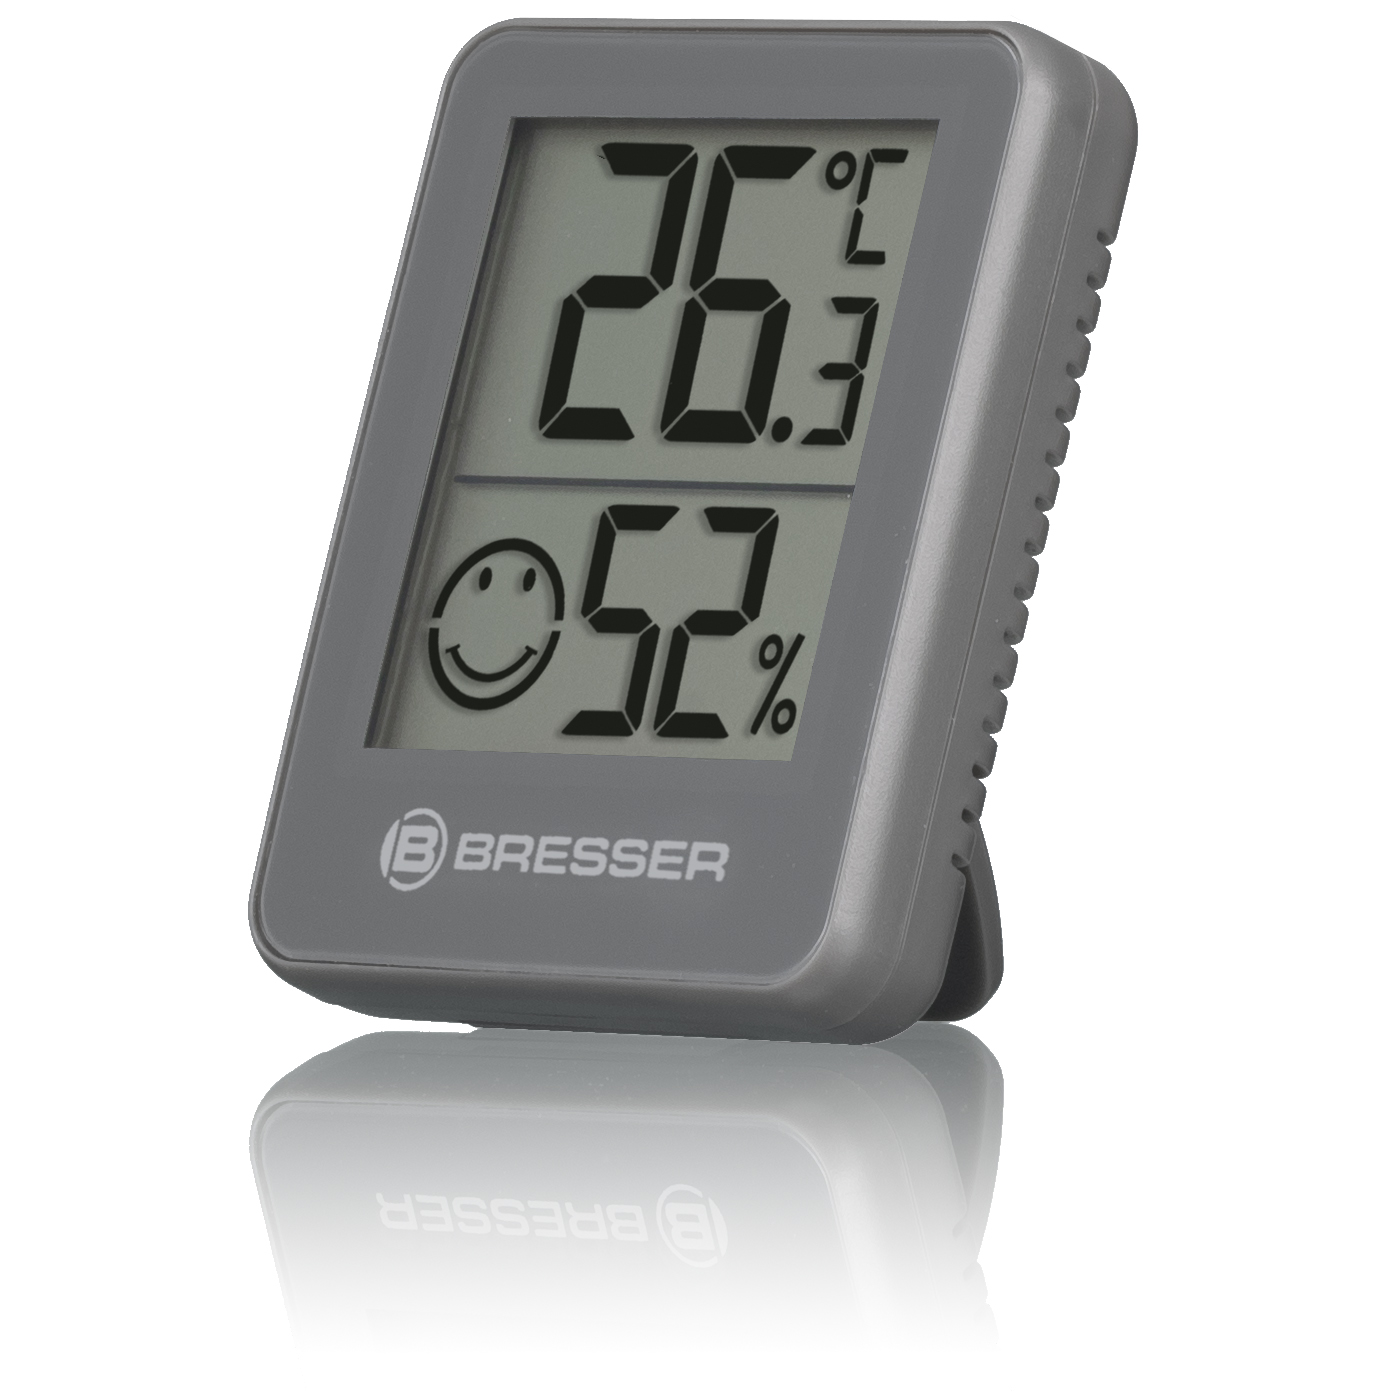 Hygro BRESSER Temeo 6er-Set Wetterstation Indikator Thermo-/Hygrometer